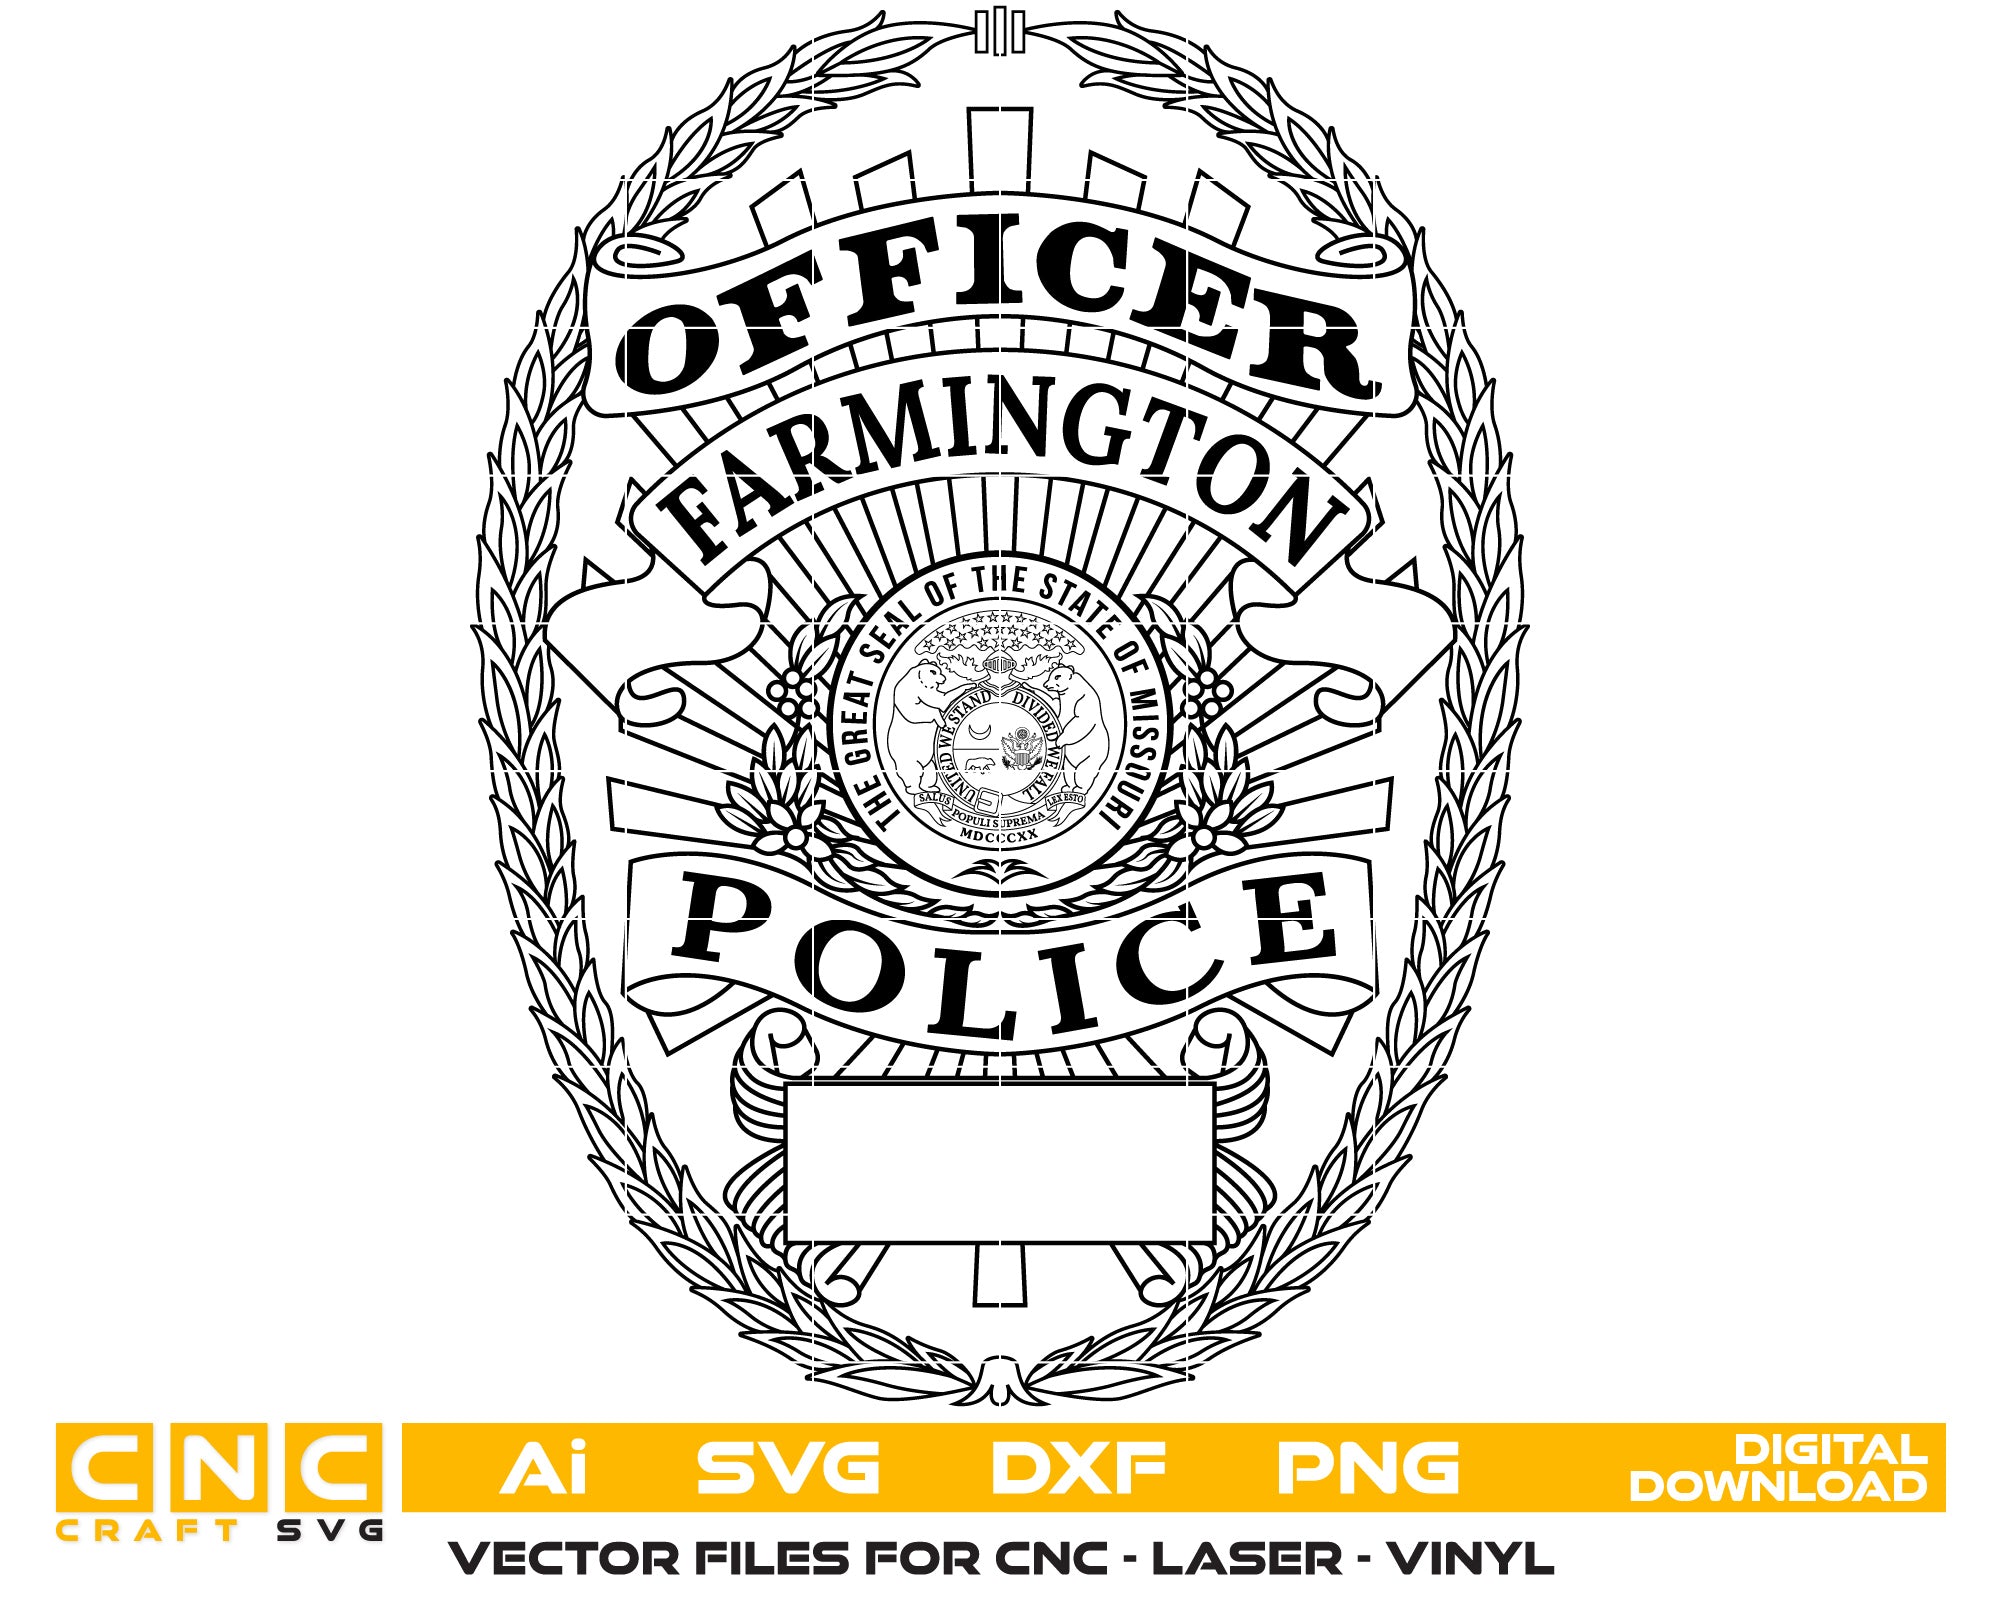 Missouri Farmington Police Officer Badge vector art